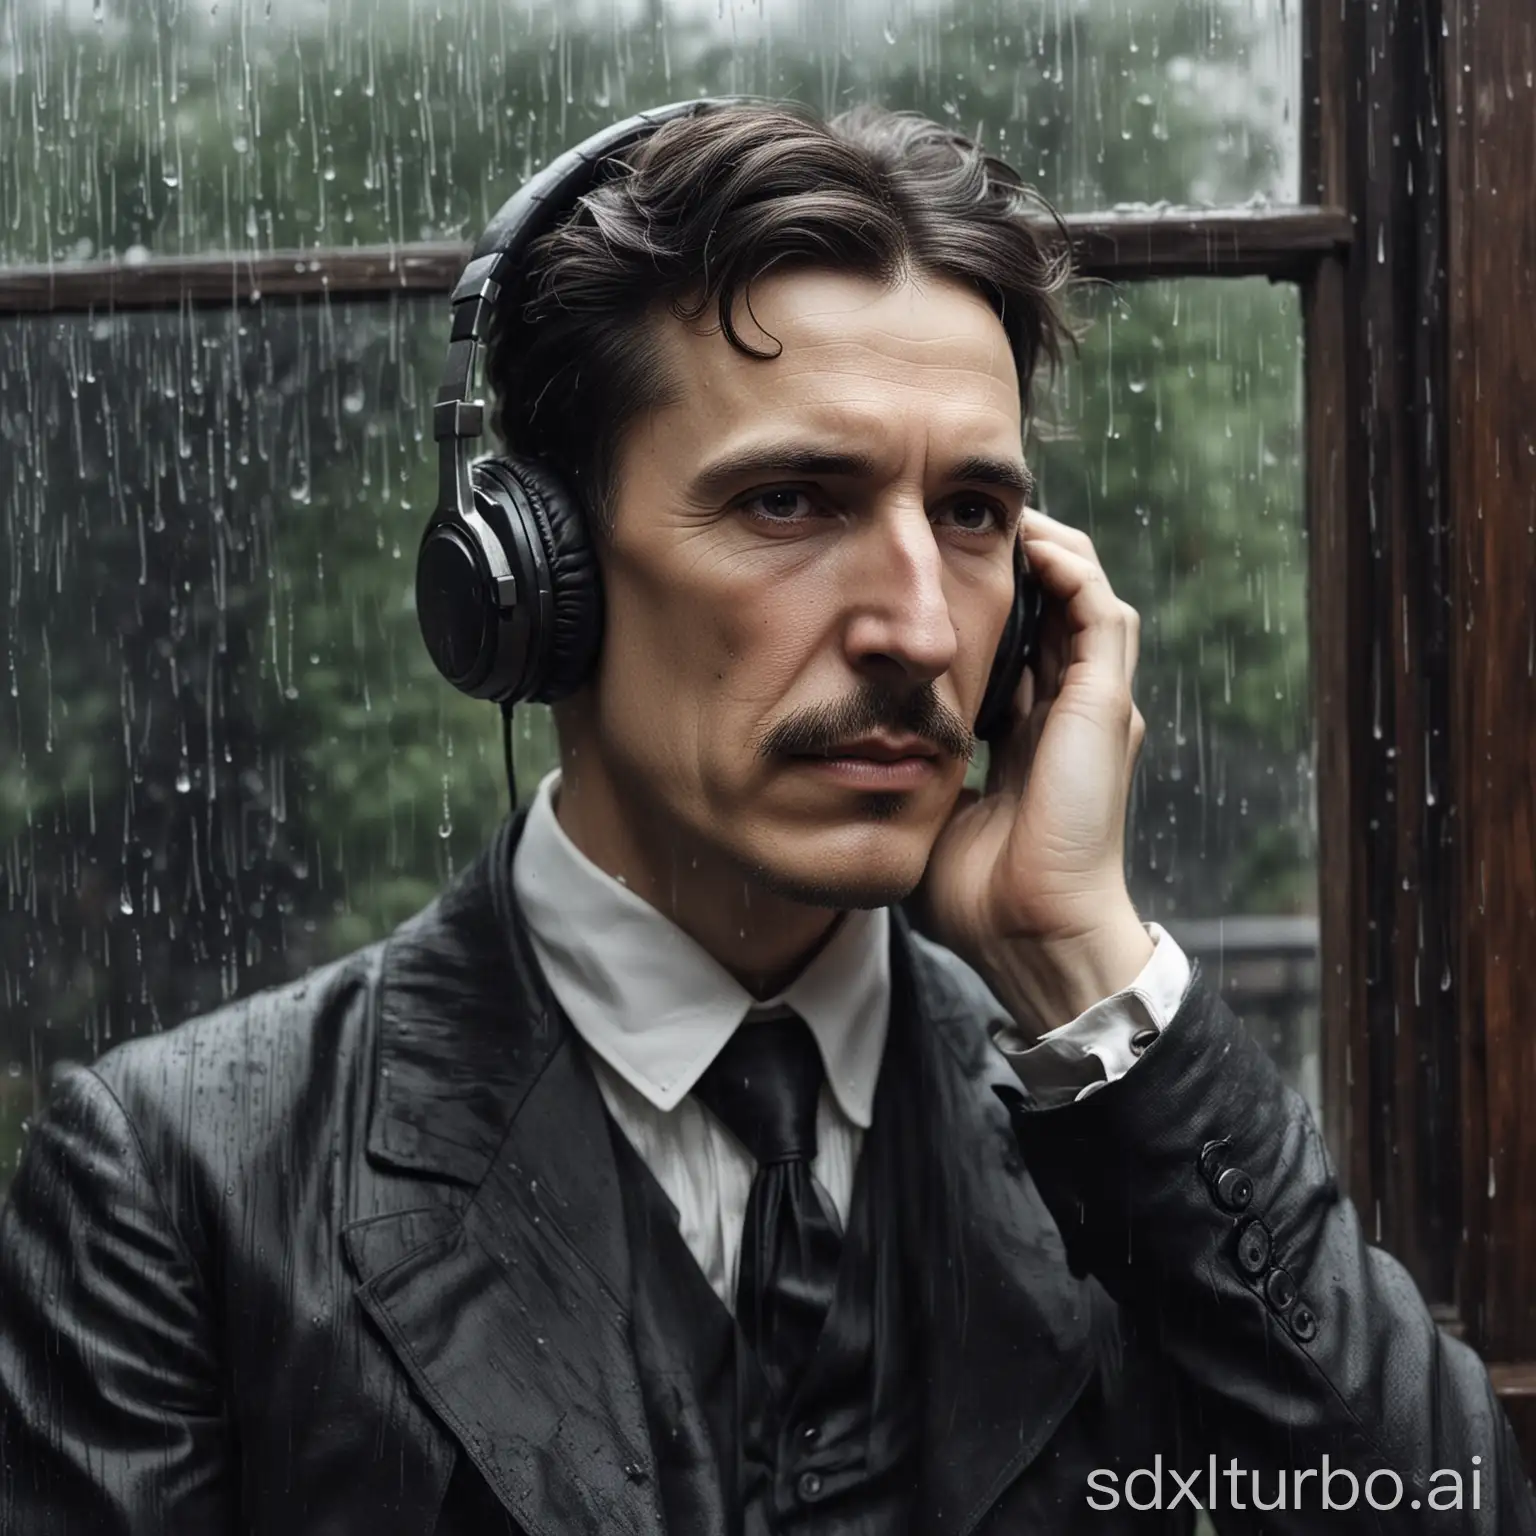 Nikola-Tesla-Listening-to-Music-in-Rainy-Mood